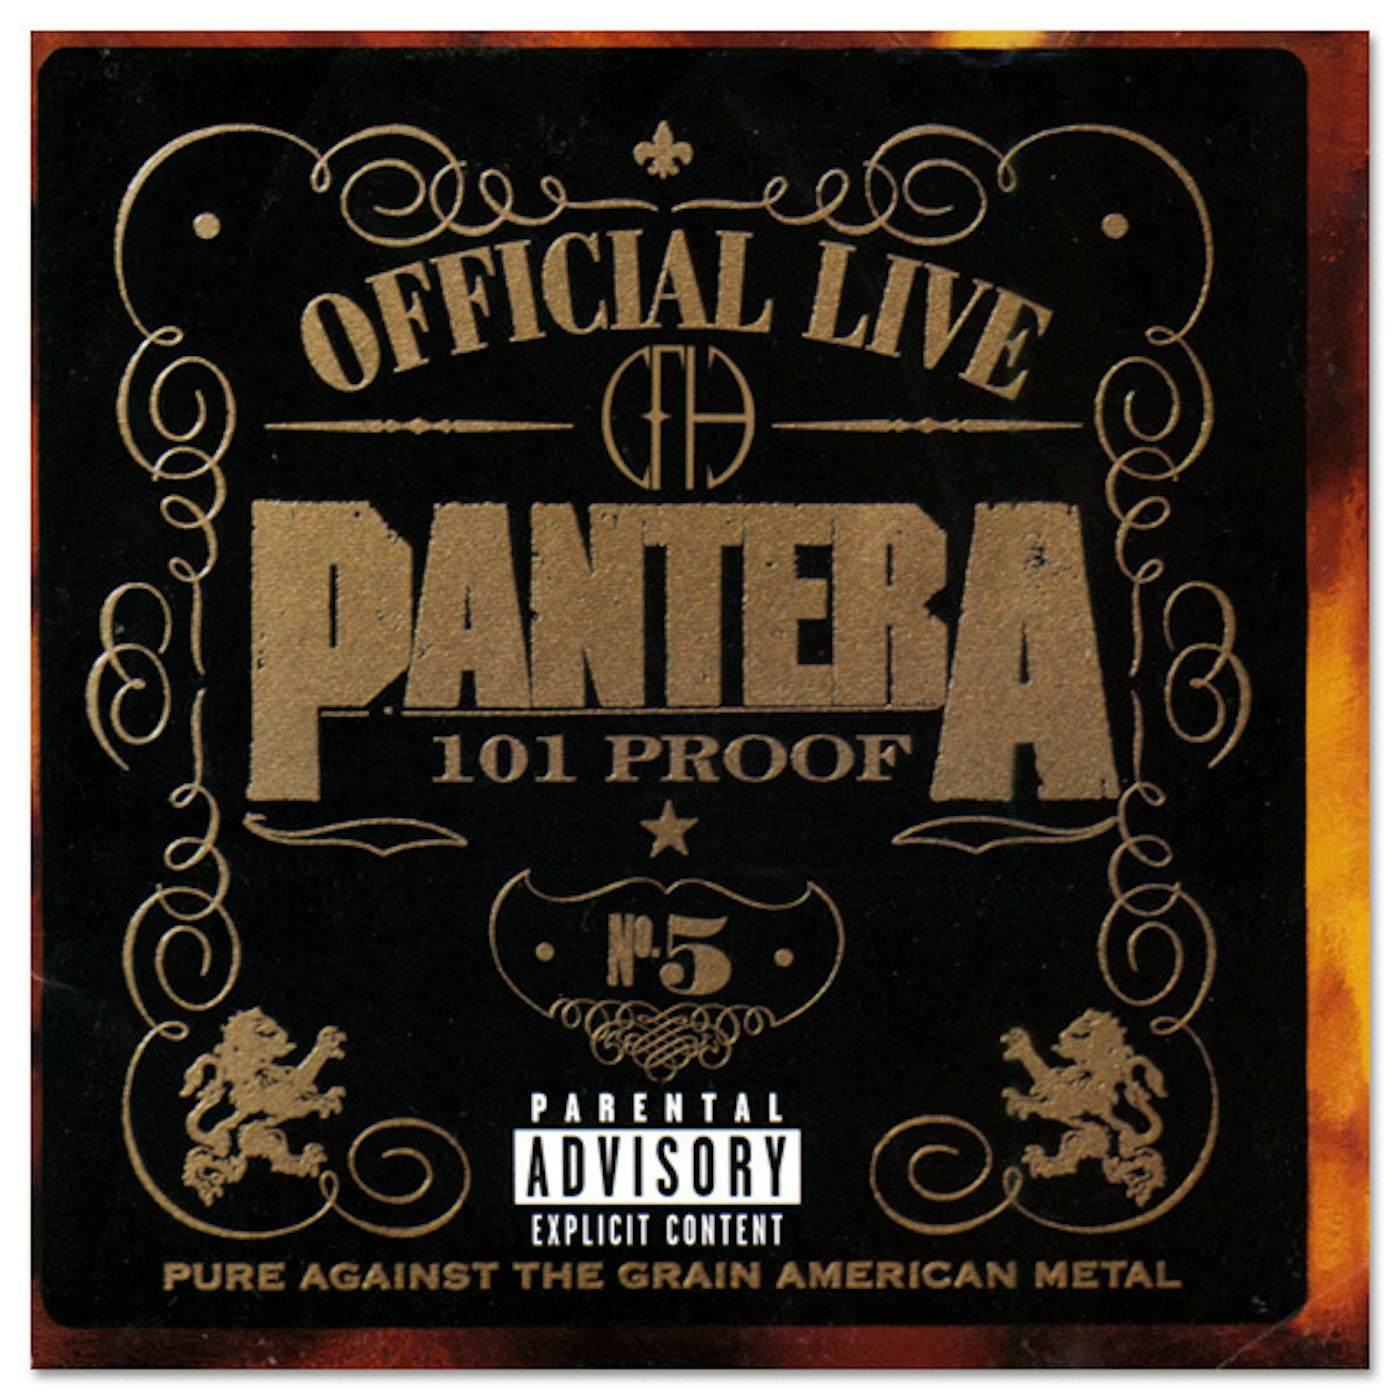 Pantera Official Live CD